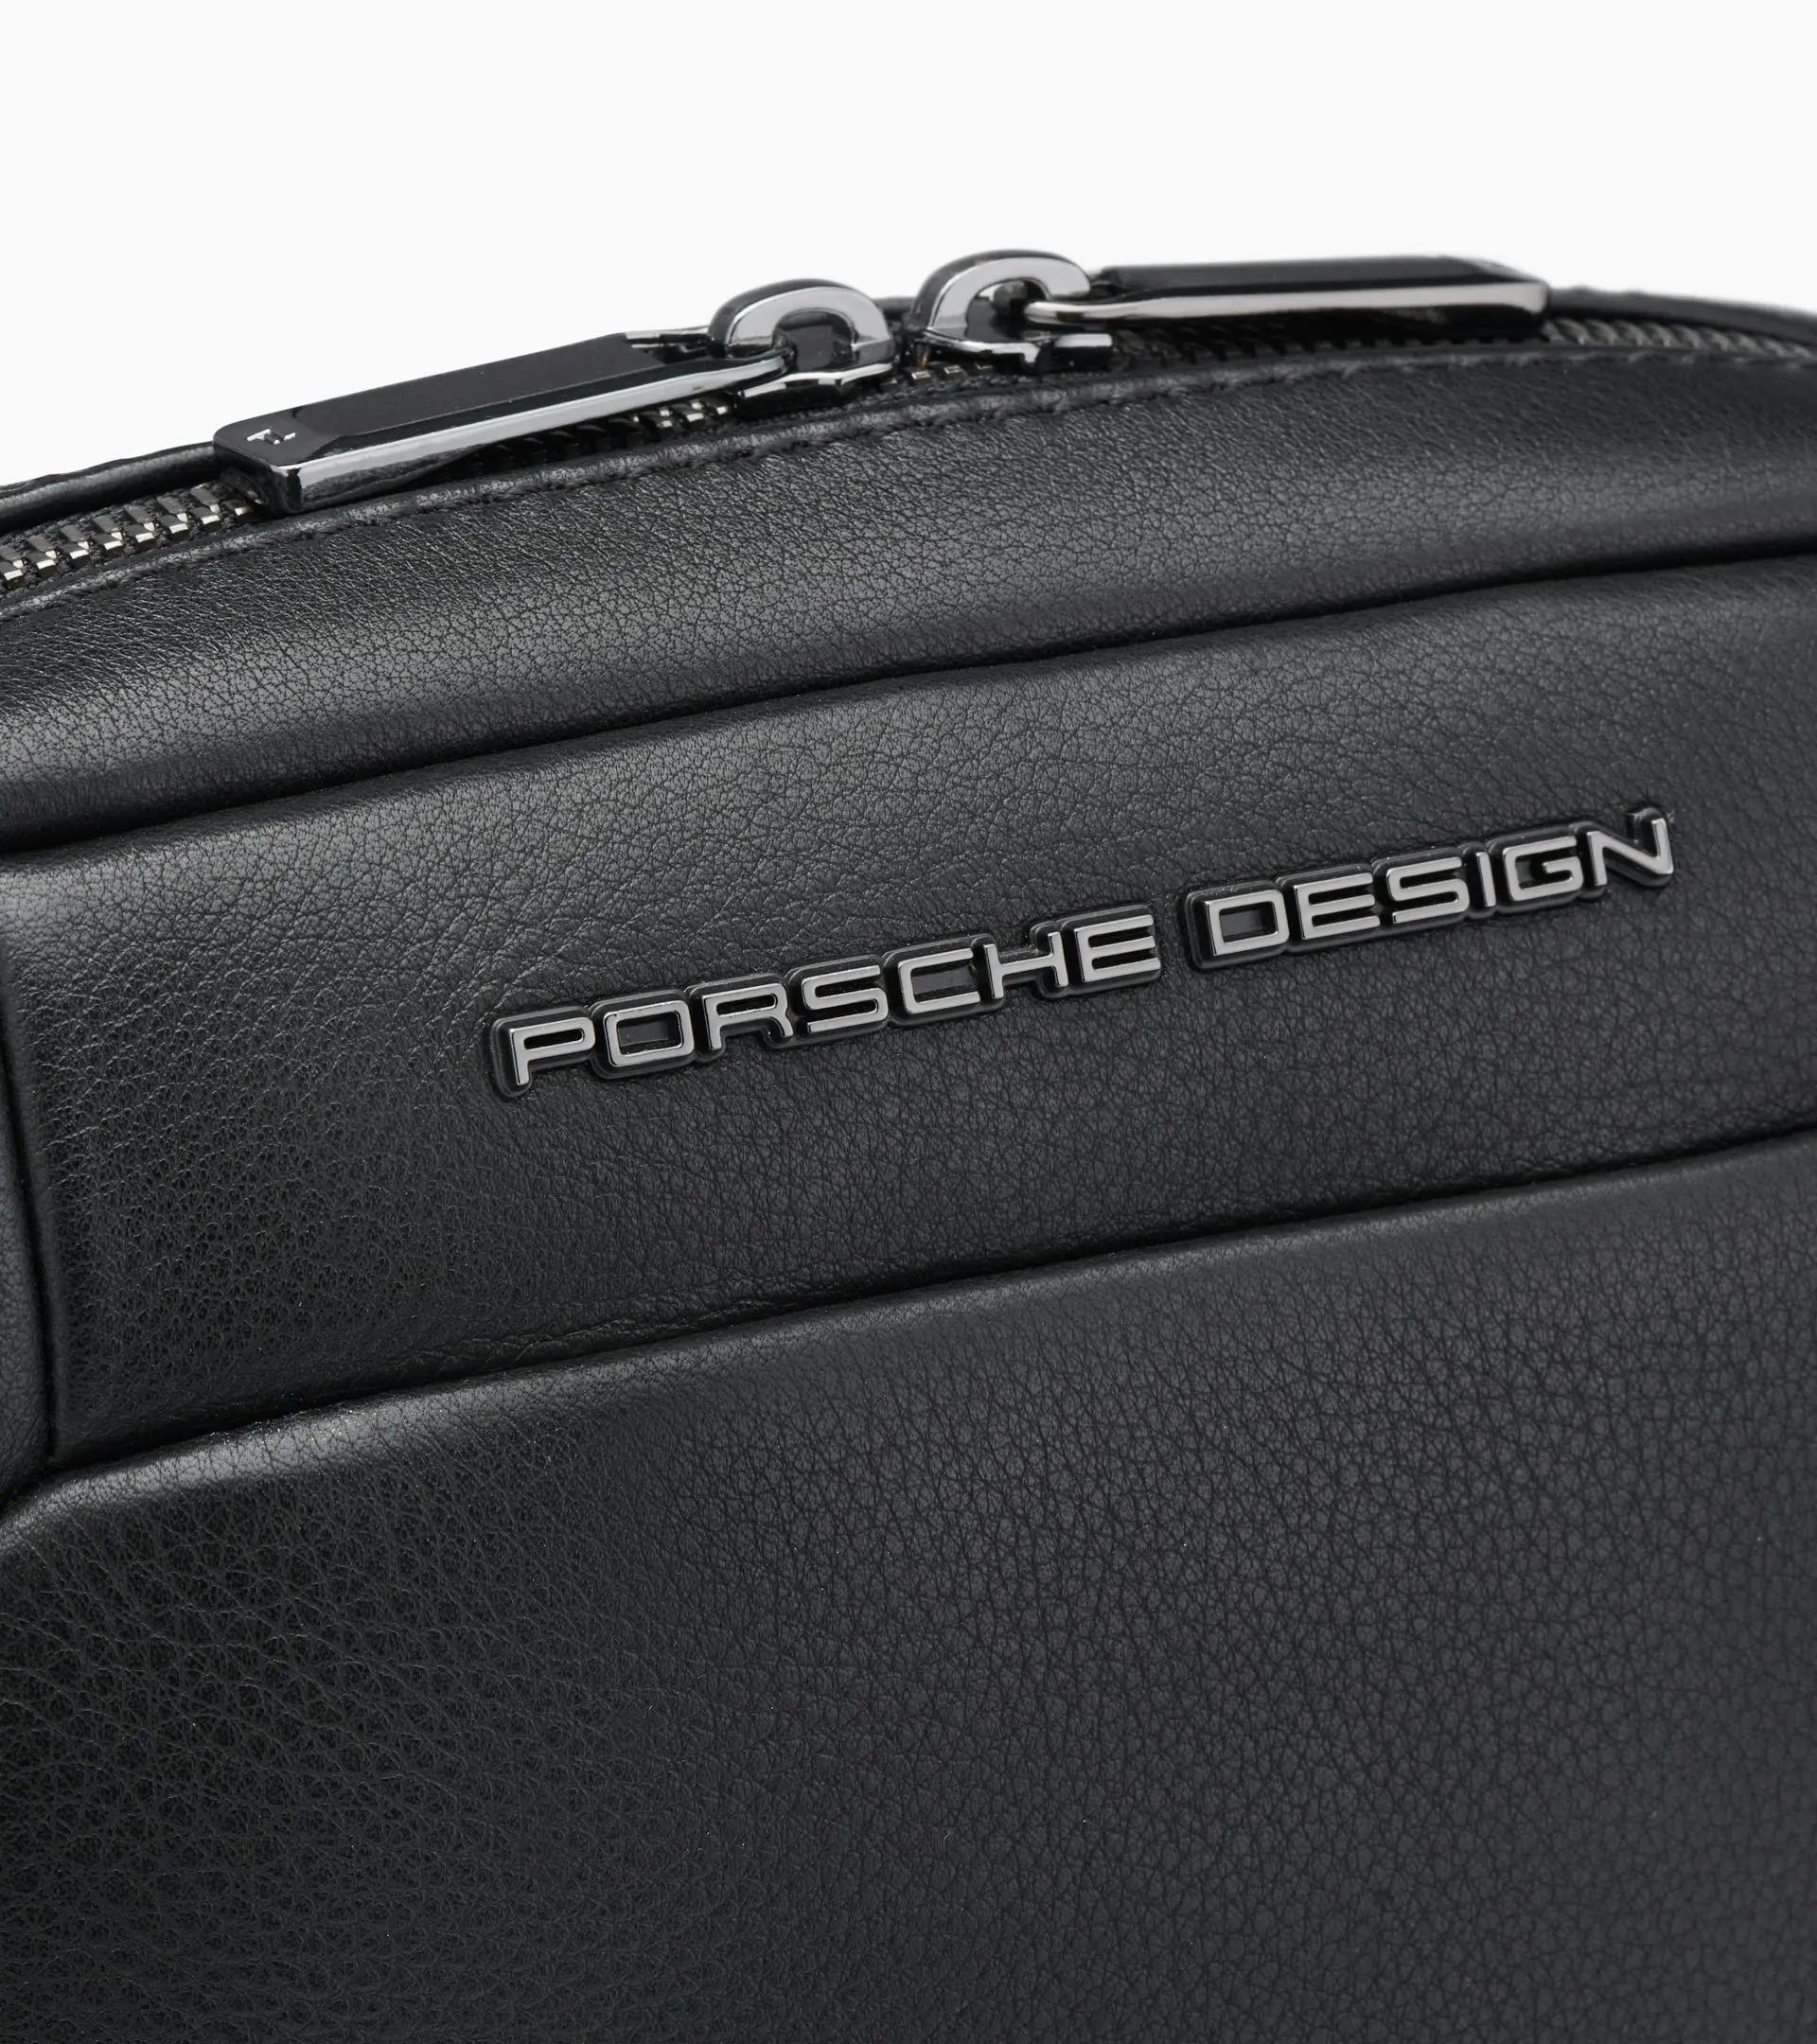 Porsche Design Roadster Leather Shoulderbag XS